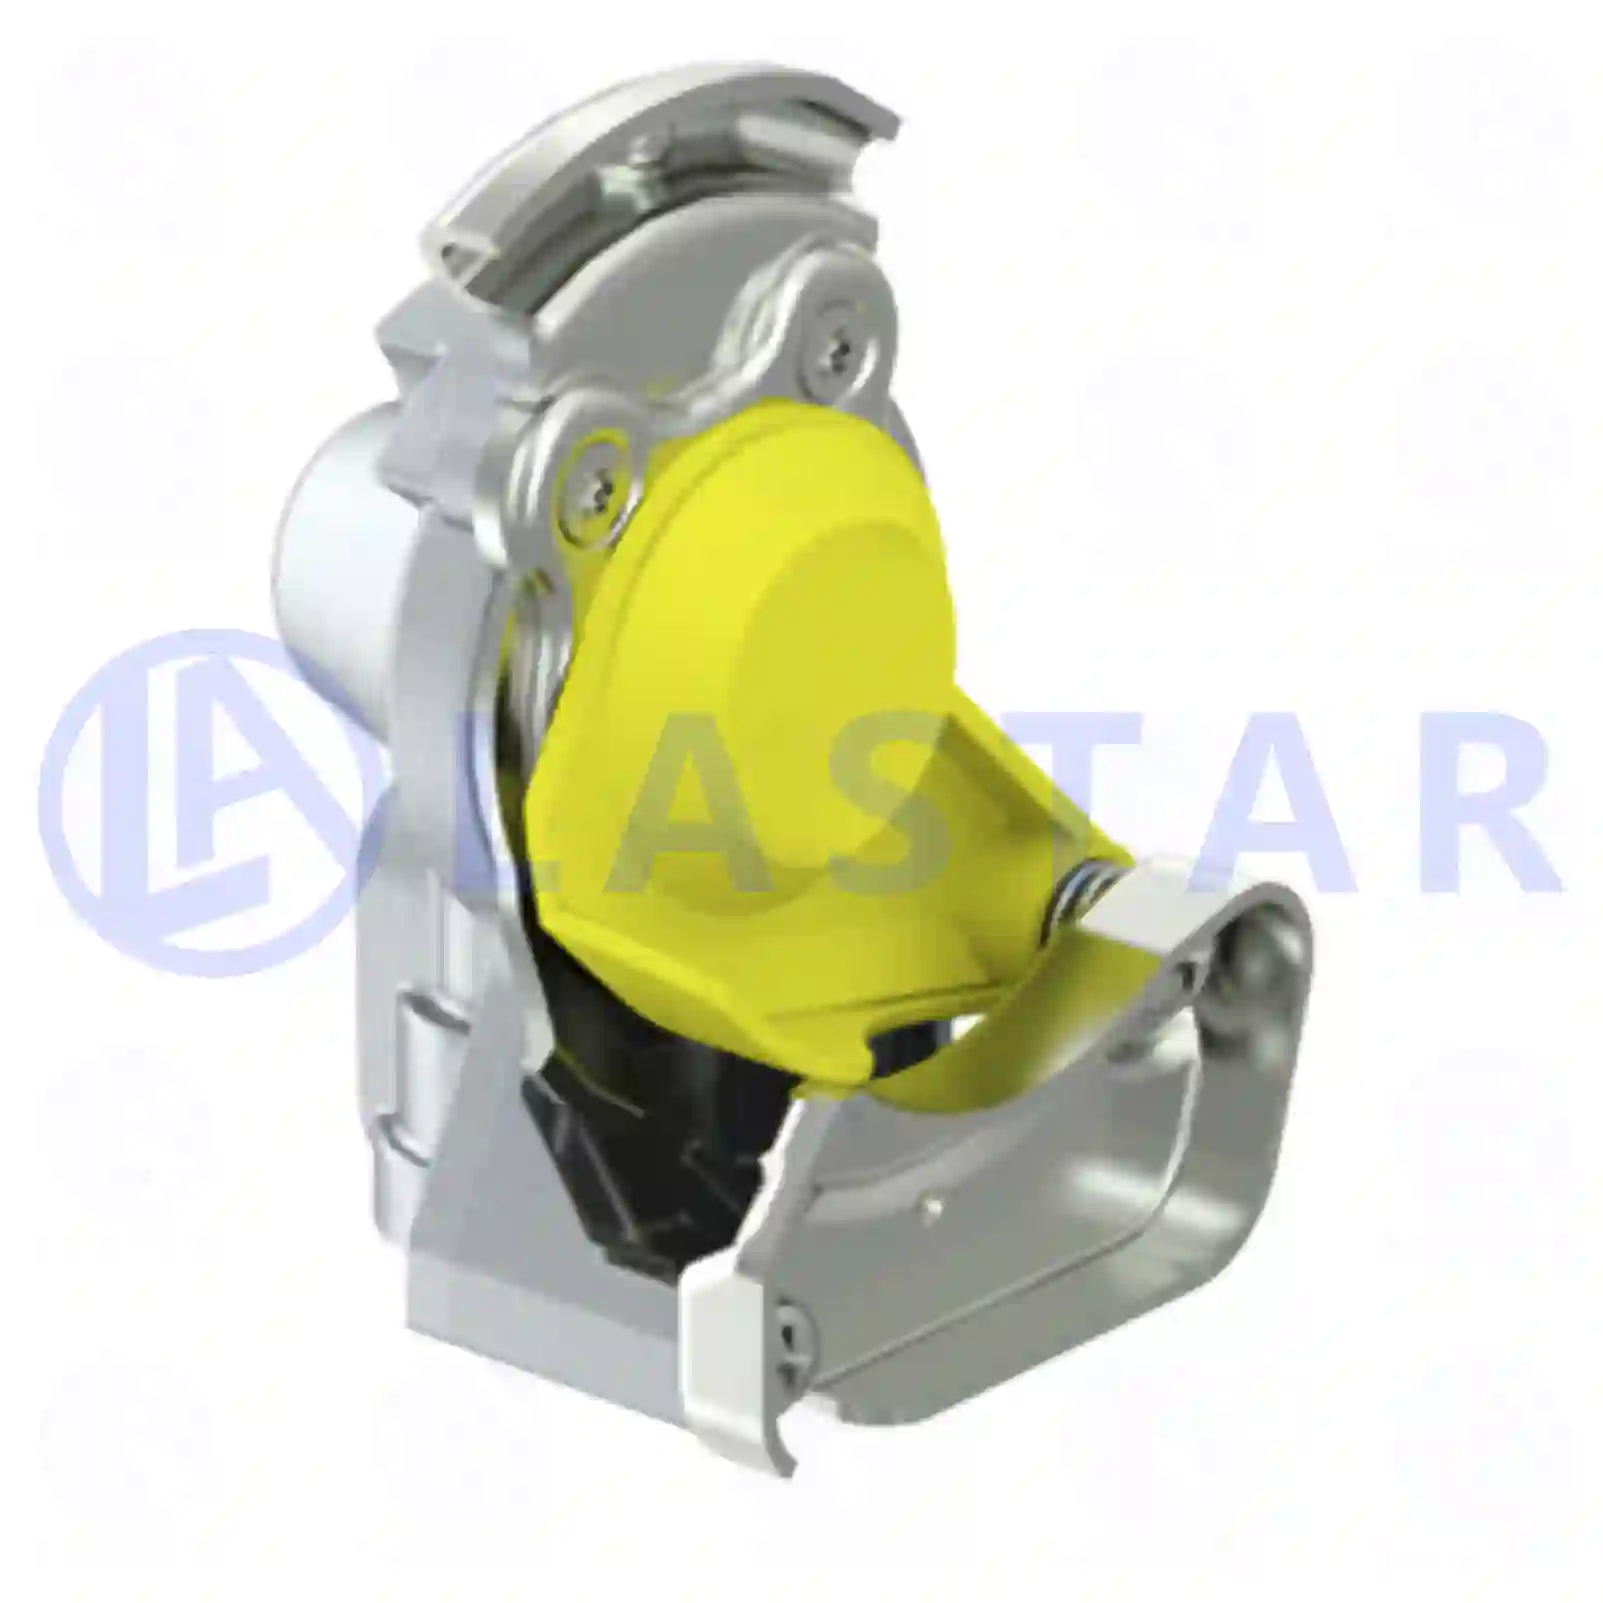  Palm coupling, automatic shutter, yellow lid || Lastar Spare Part | Truck Spare Parts, Auotomotive Spare Parts